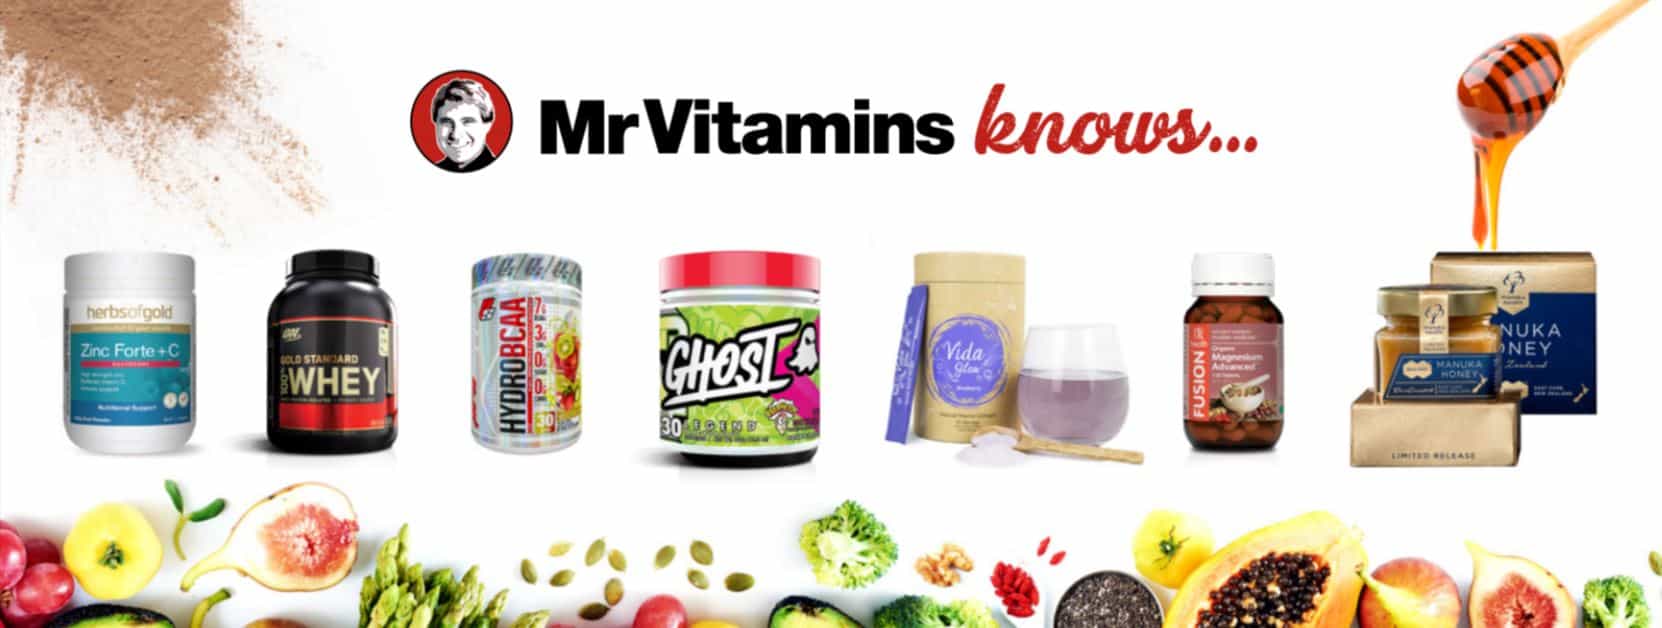 Mr Vitamins Sale - Up to 50% off BIG Brands